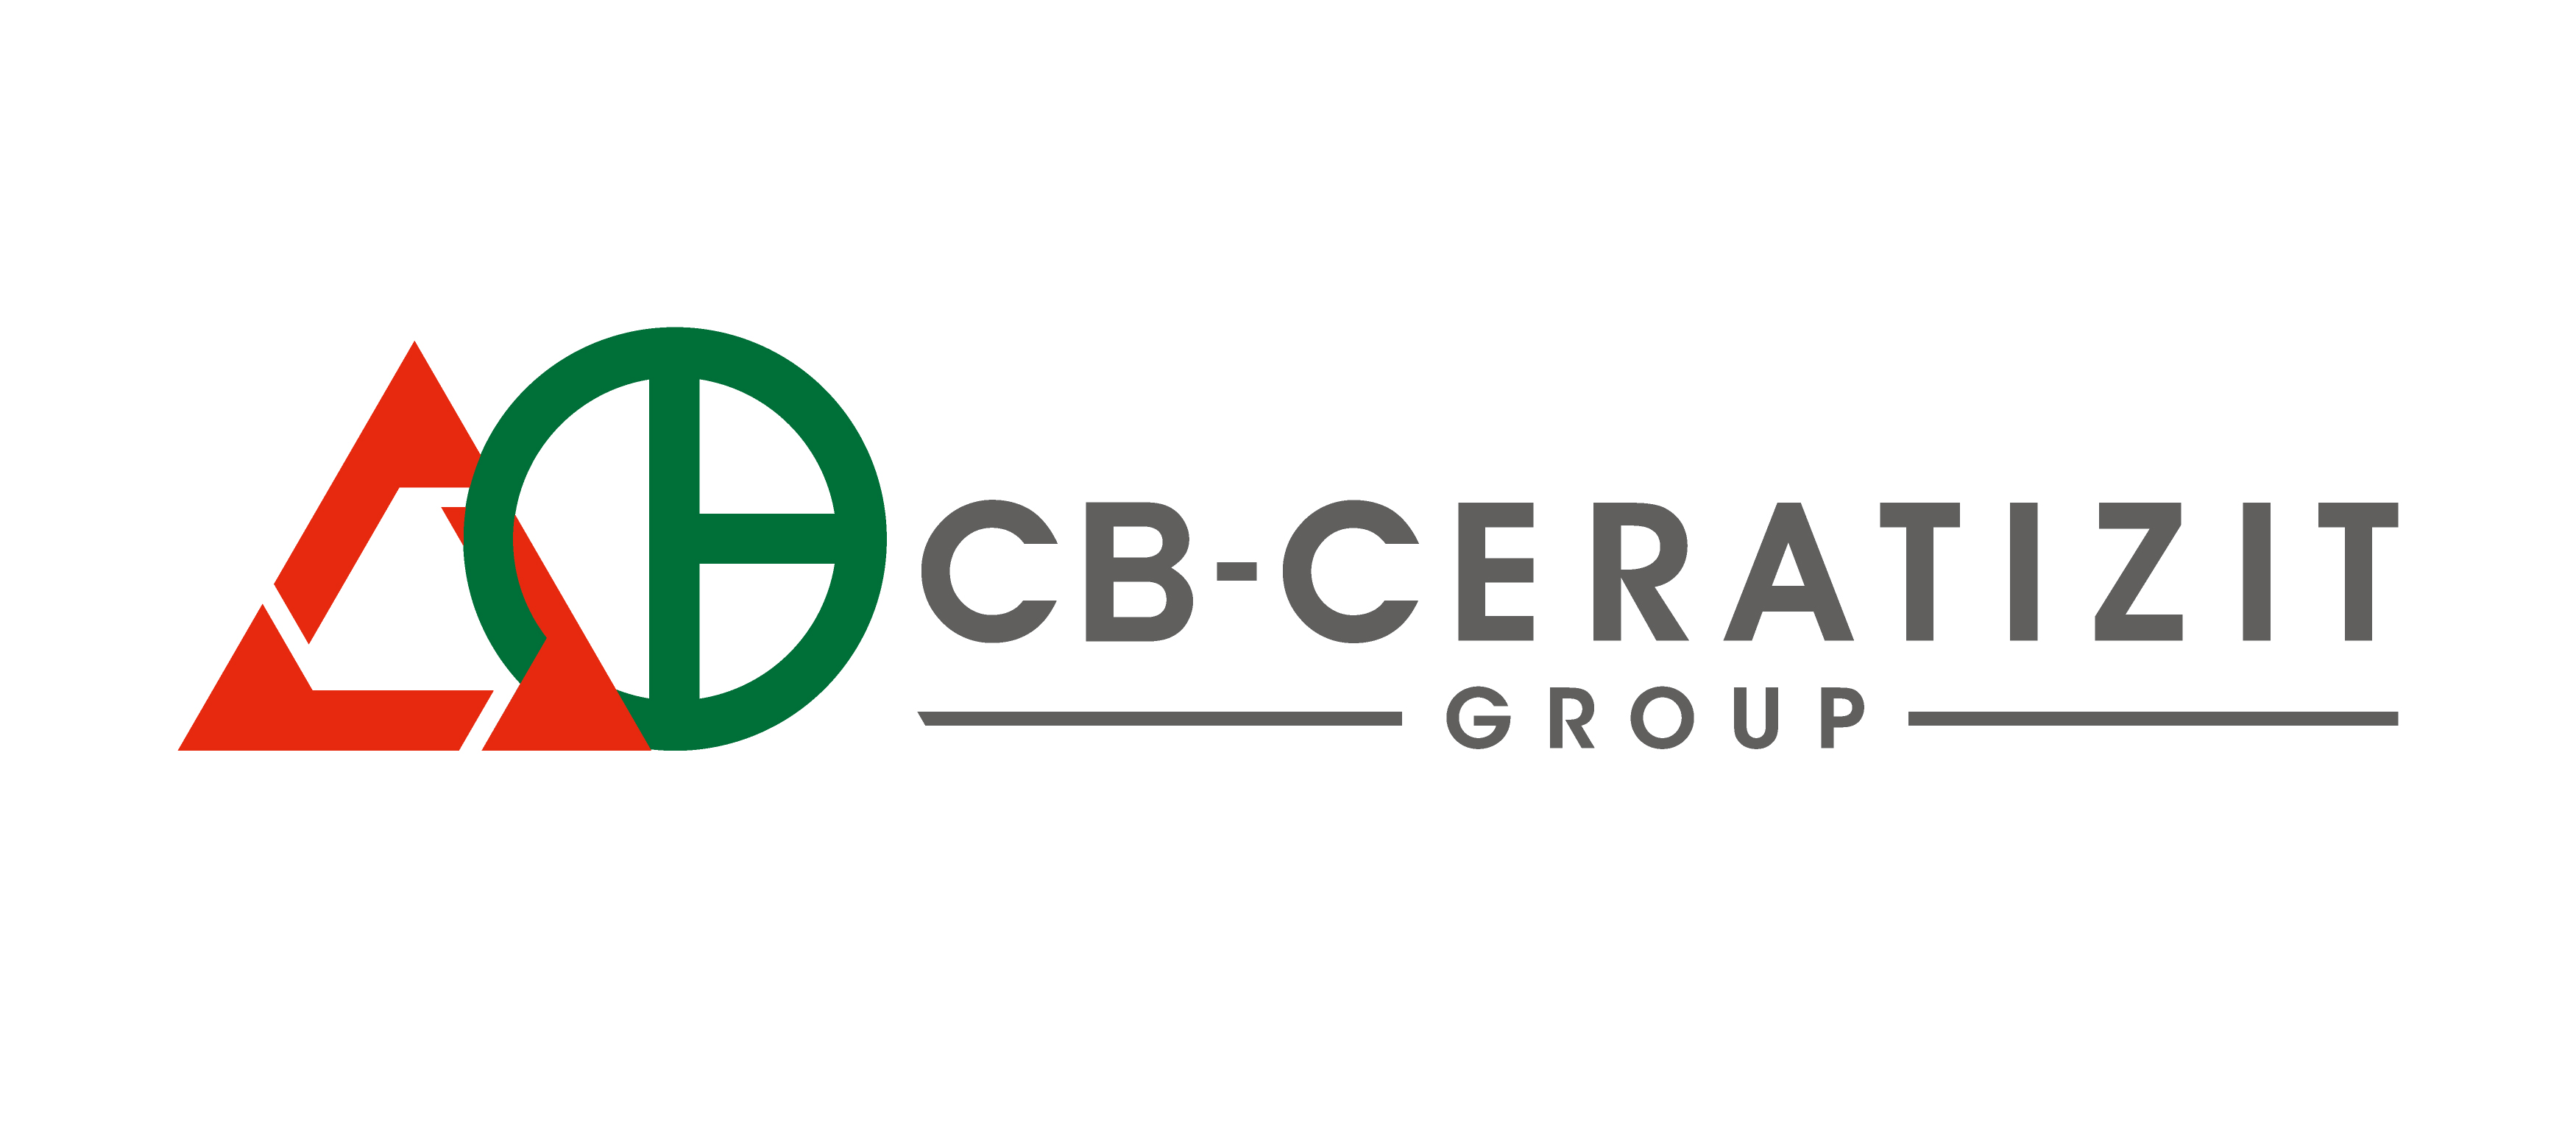 CB Group Ltd.